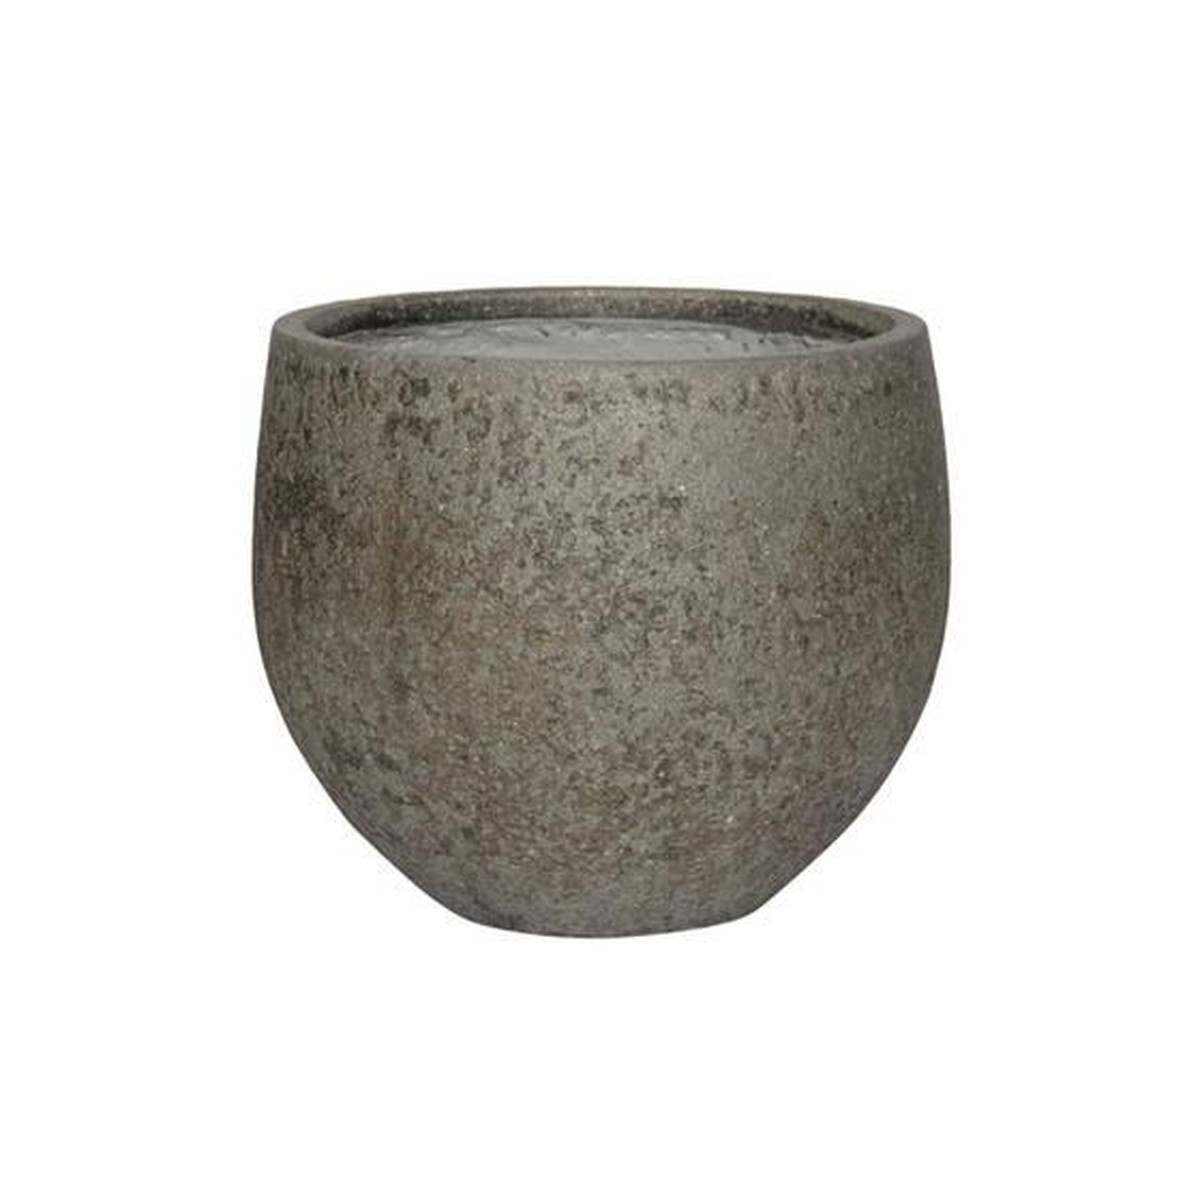 Potterypots Cement and Stone Mini Orb XL, Dioriet Grey Gris plomb 40x34cm 30L